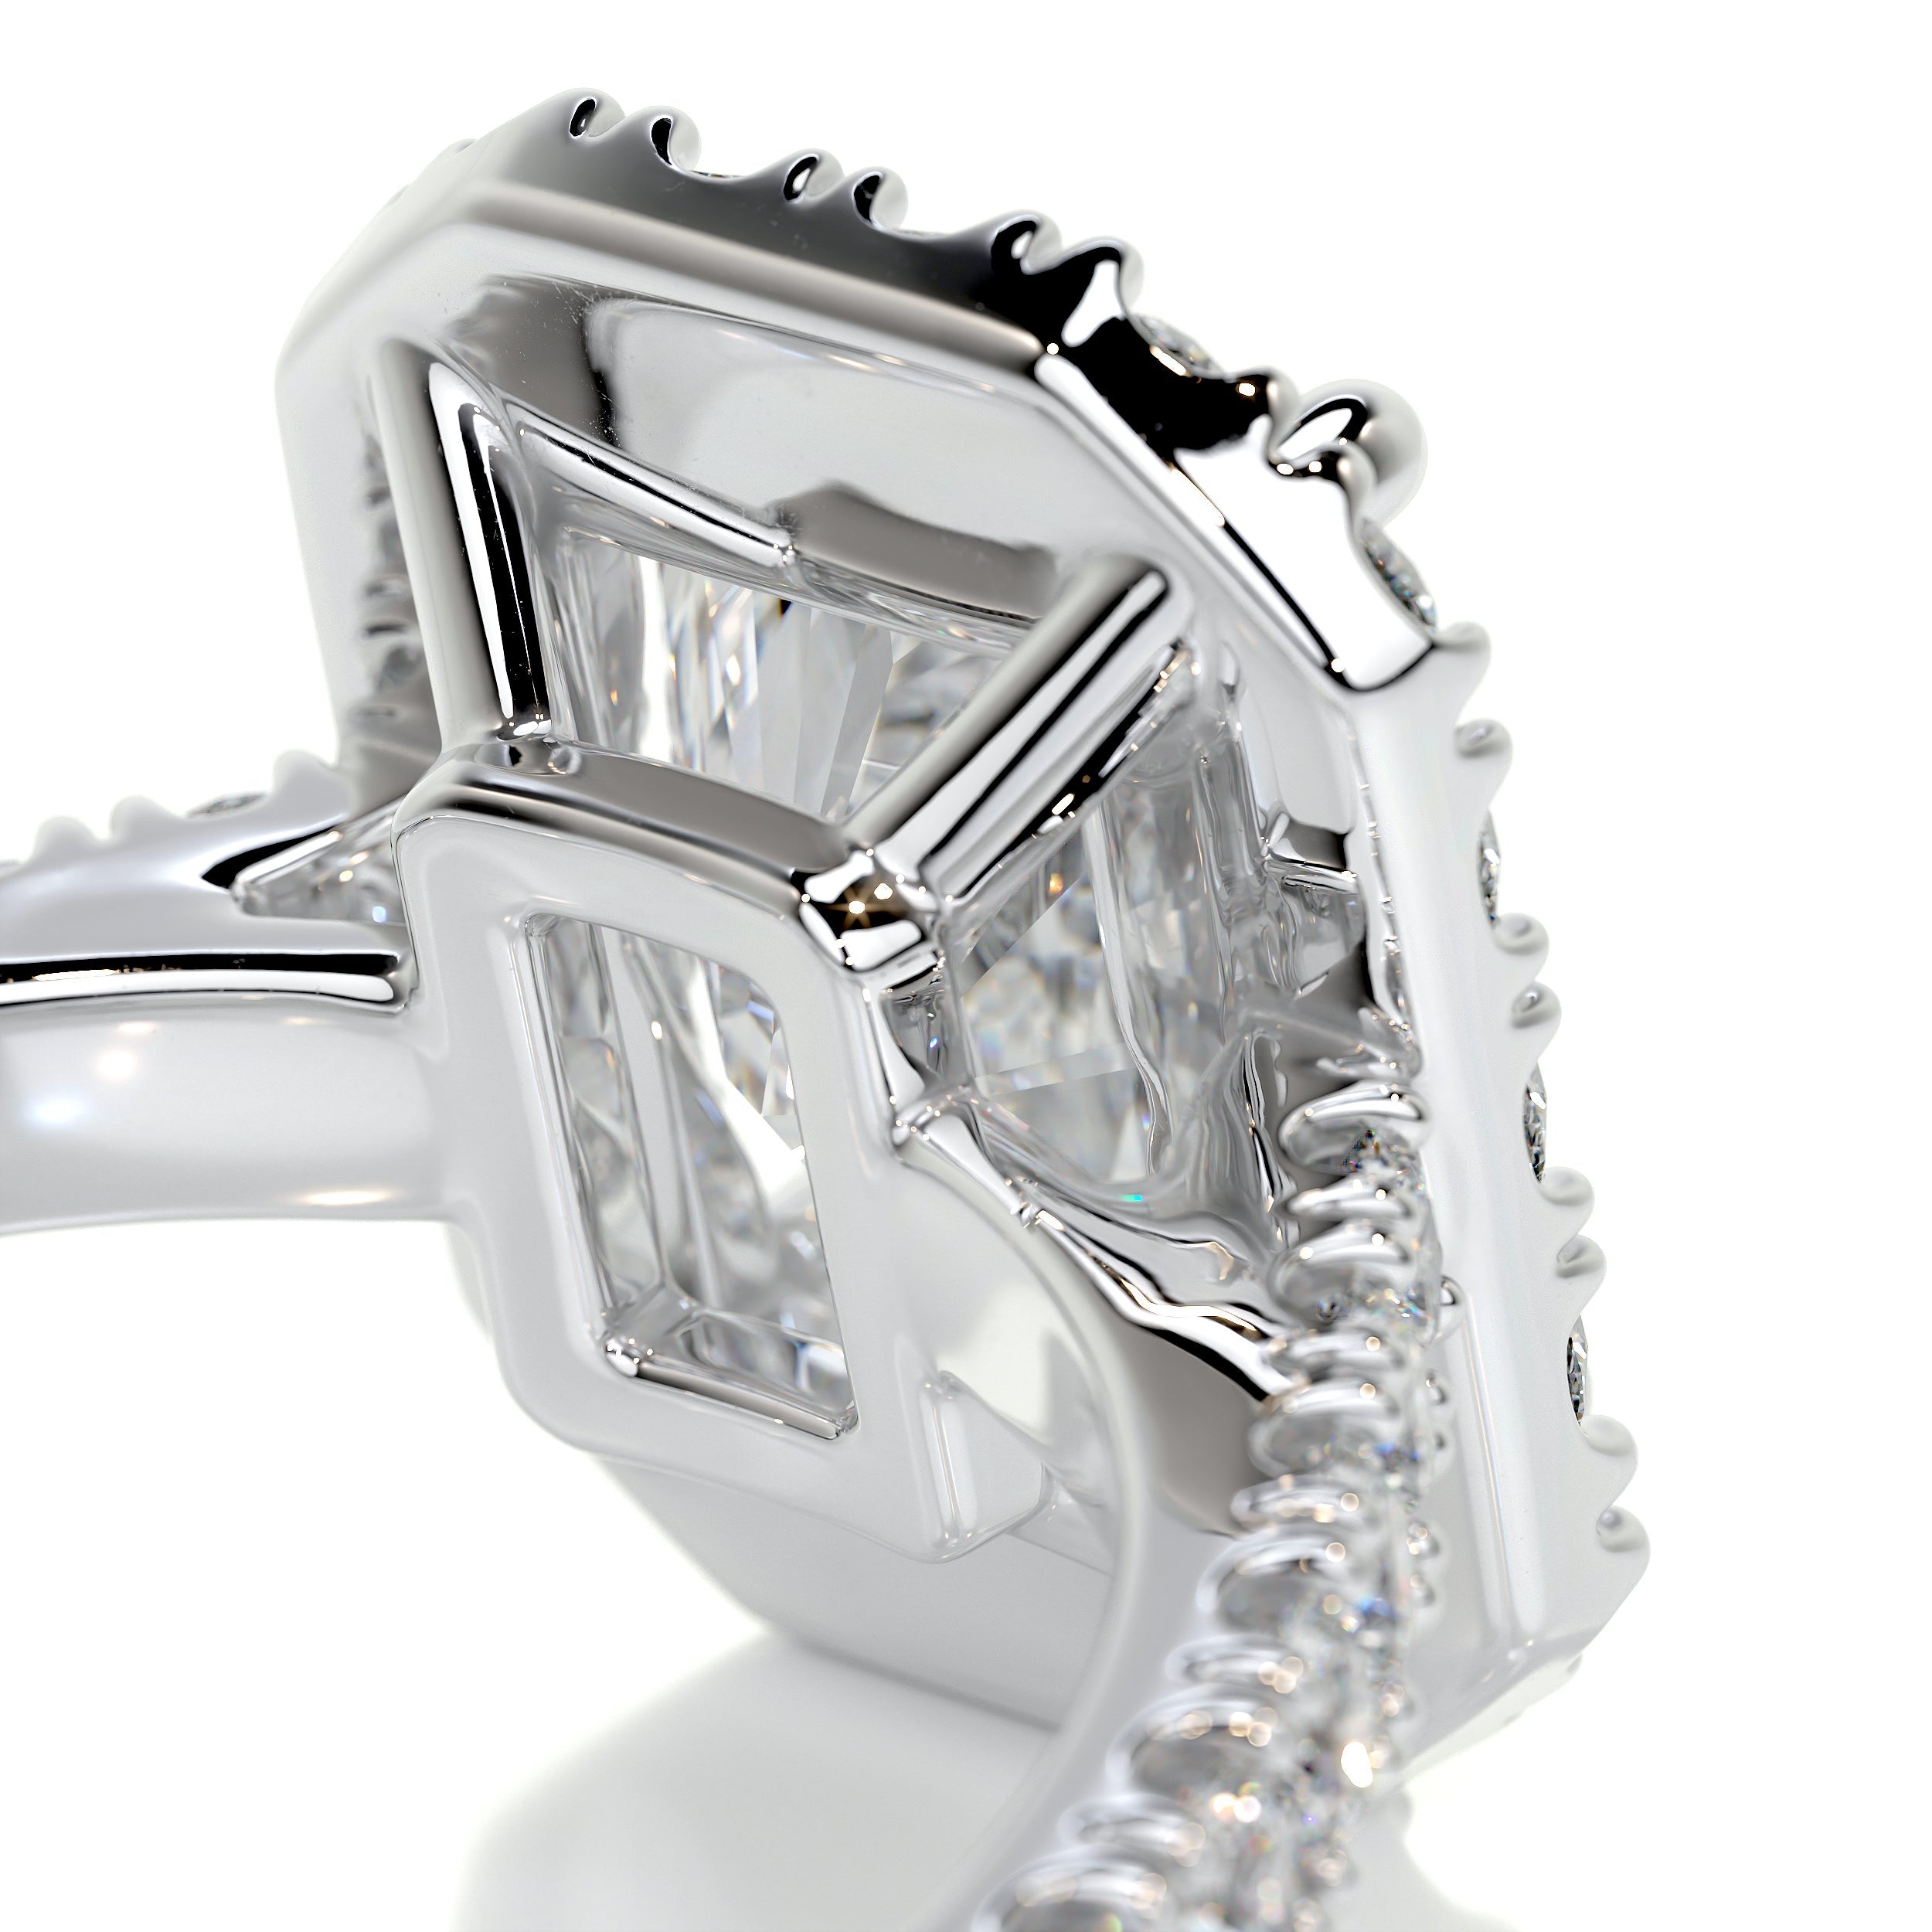 Andrea Diamond Engagement Ring   (2.25 Carat) -Platinum (RTS)